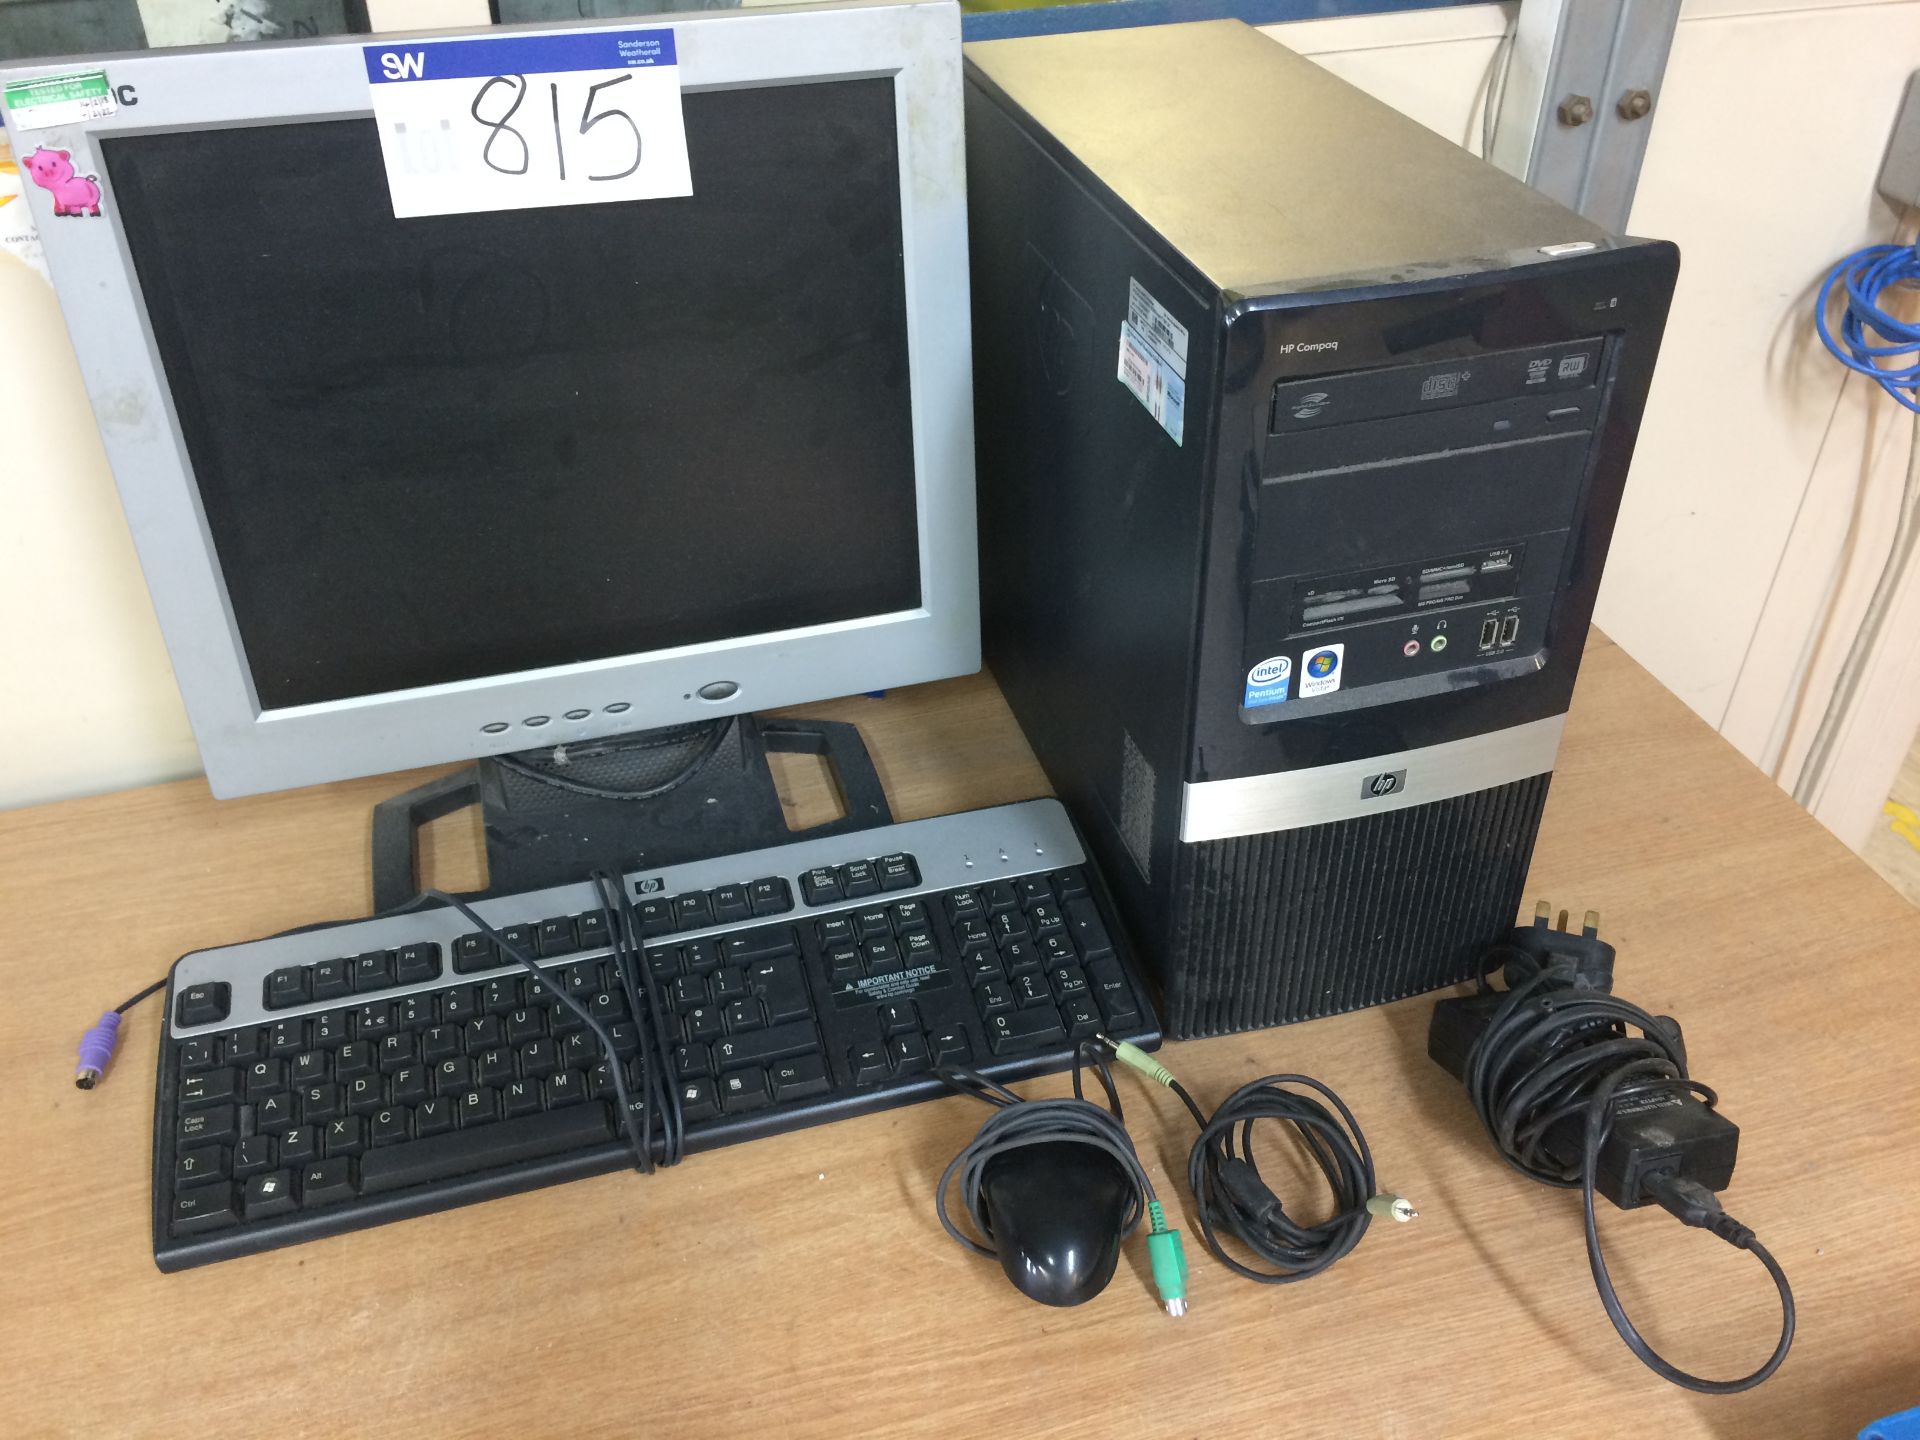 HP Compaq DX2400 Microtower Desktop Personal Computer, Intel Pentium Processor c/w Monitor, Mouse